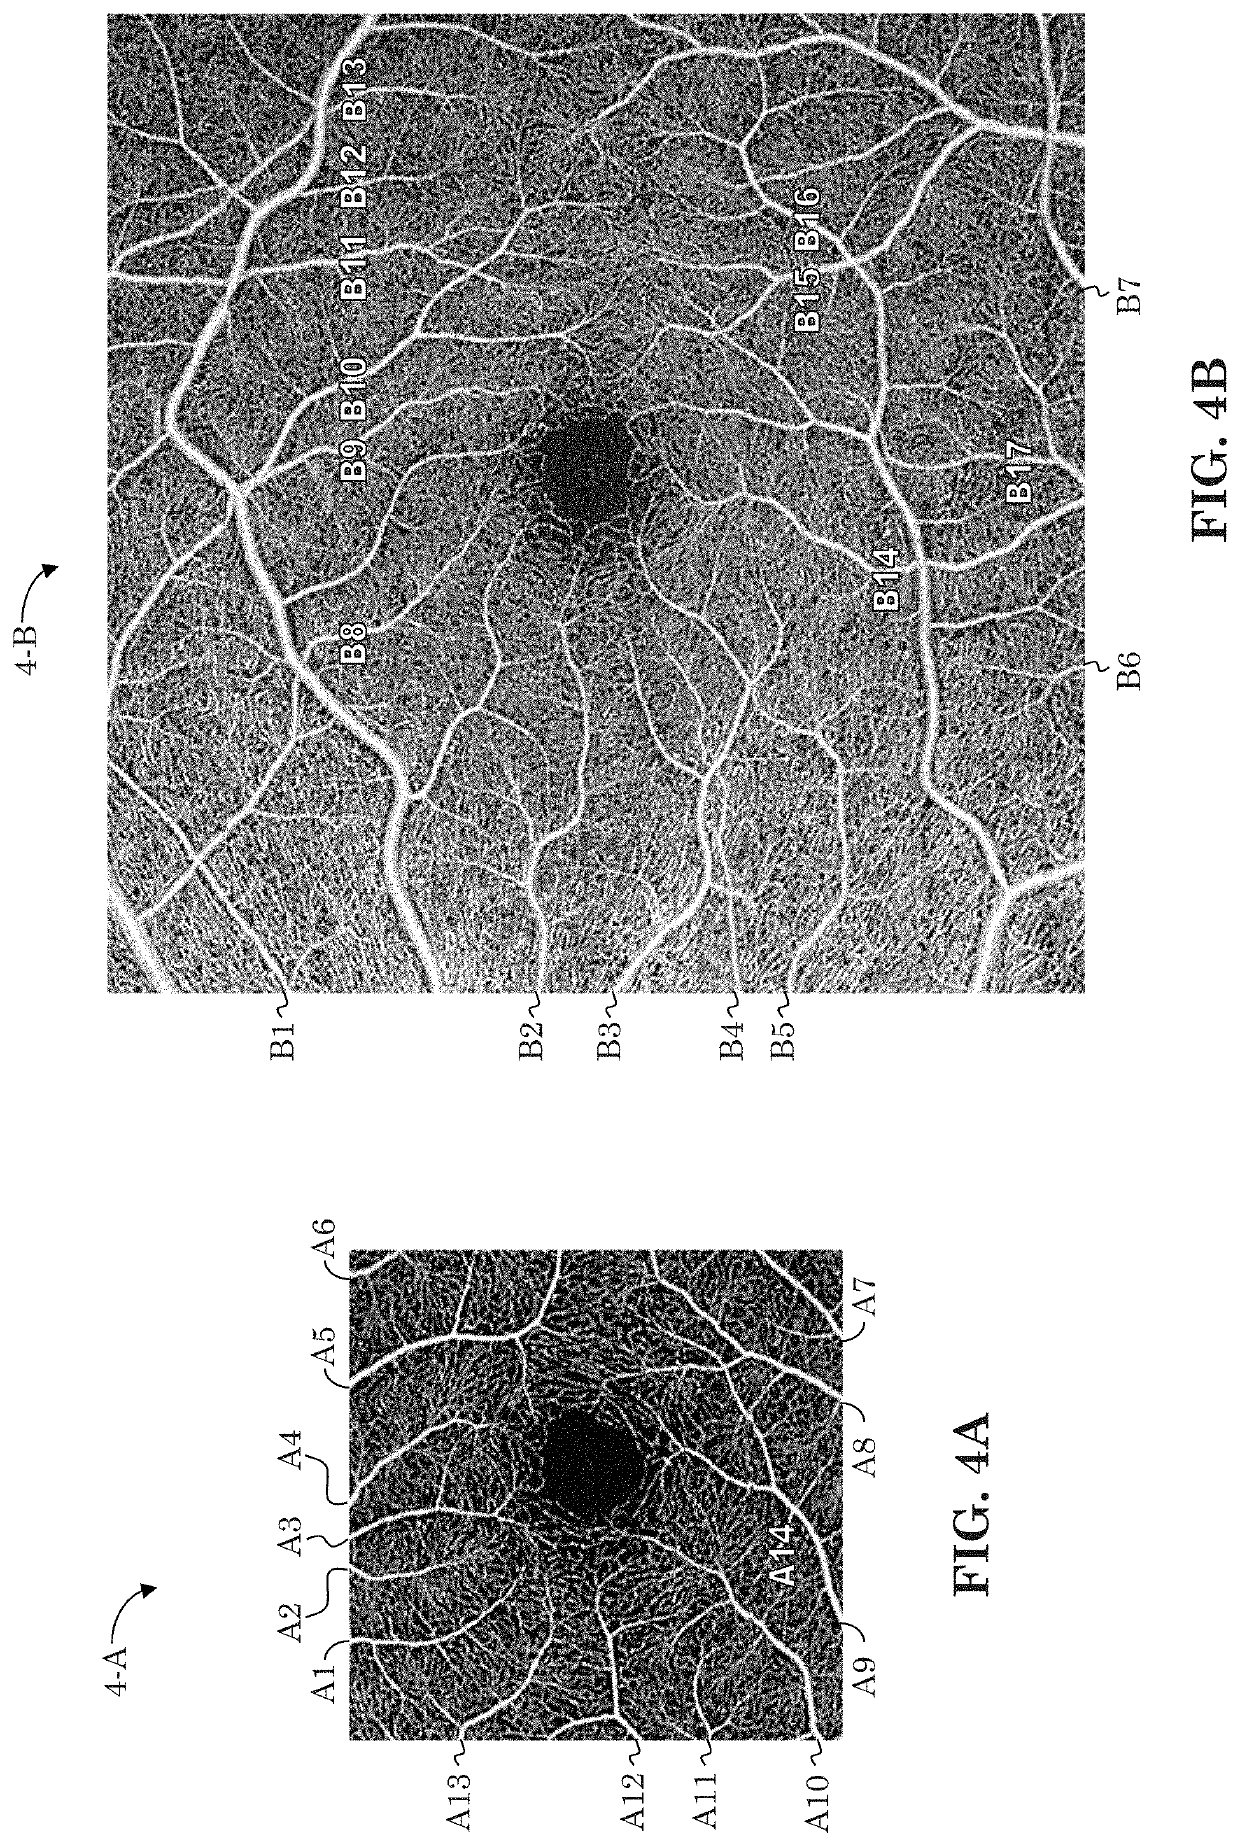 Oct-based retinal artery/vein classification